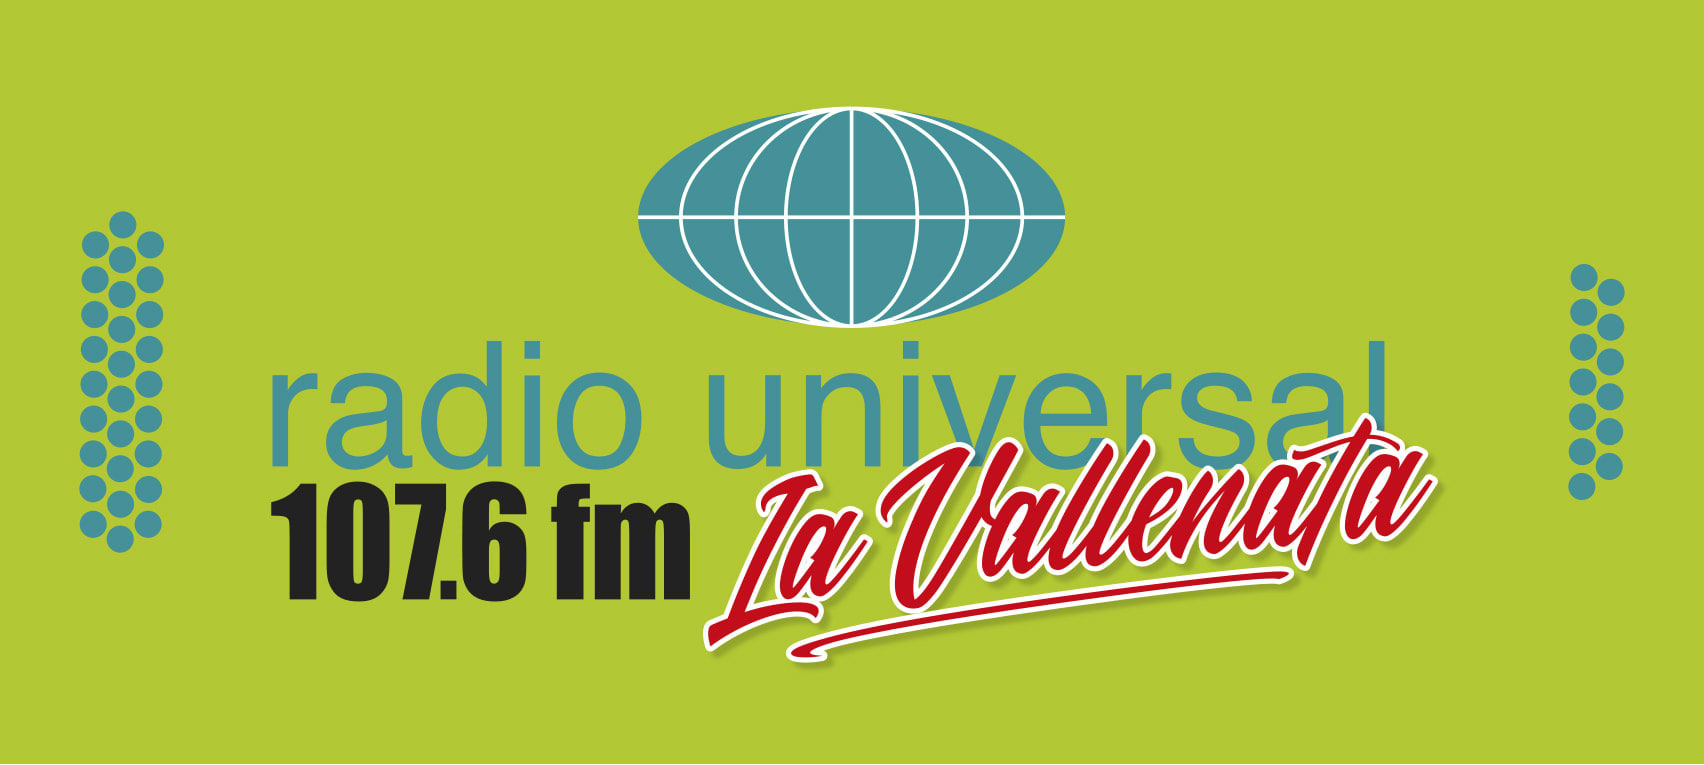 La Vallenata 107.6 FM